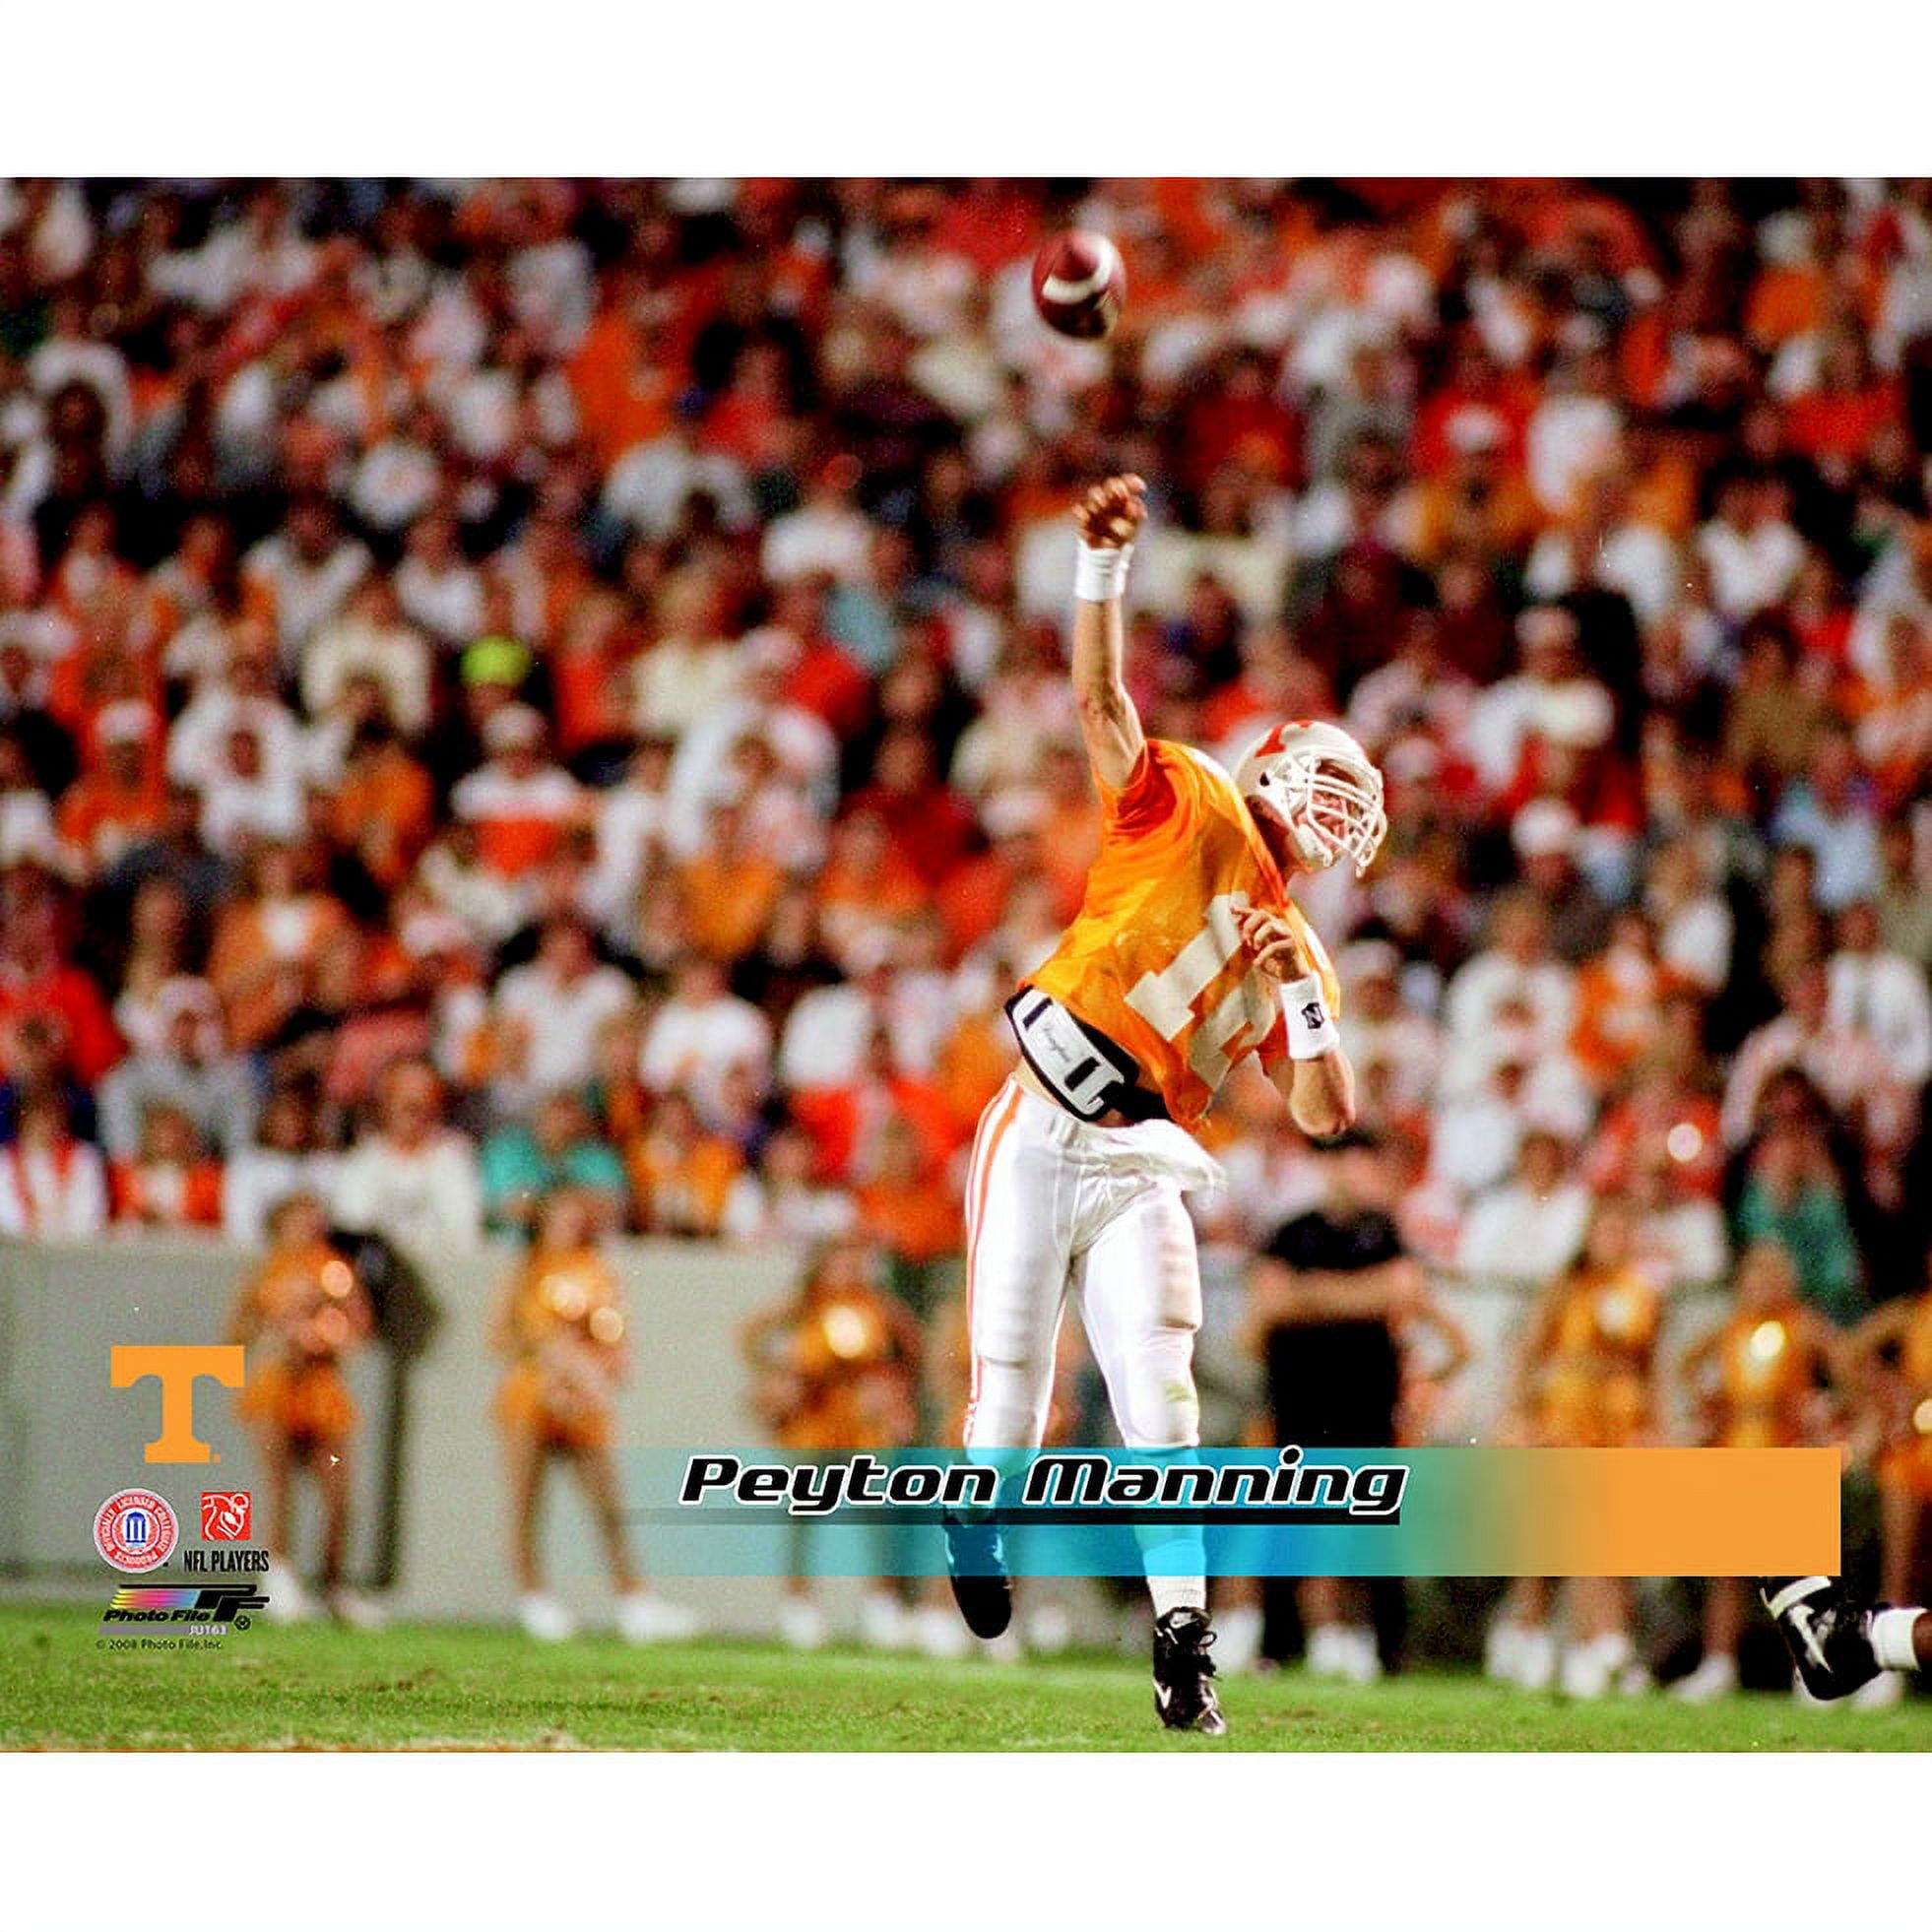 Peyton Manning - Football - University of Tennessee Athletics